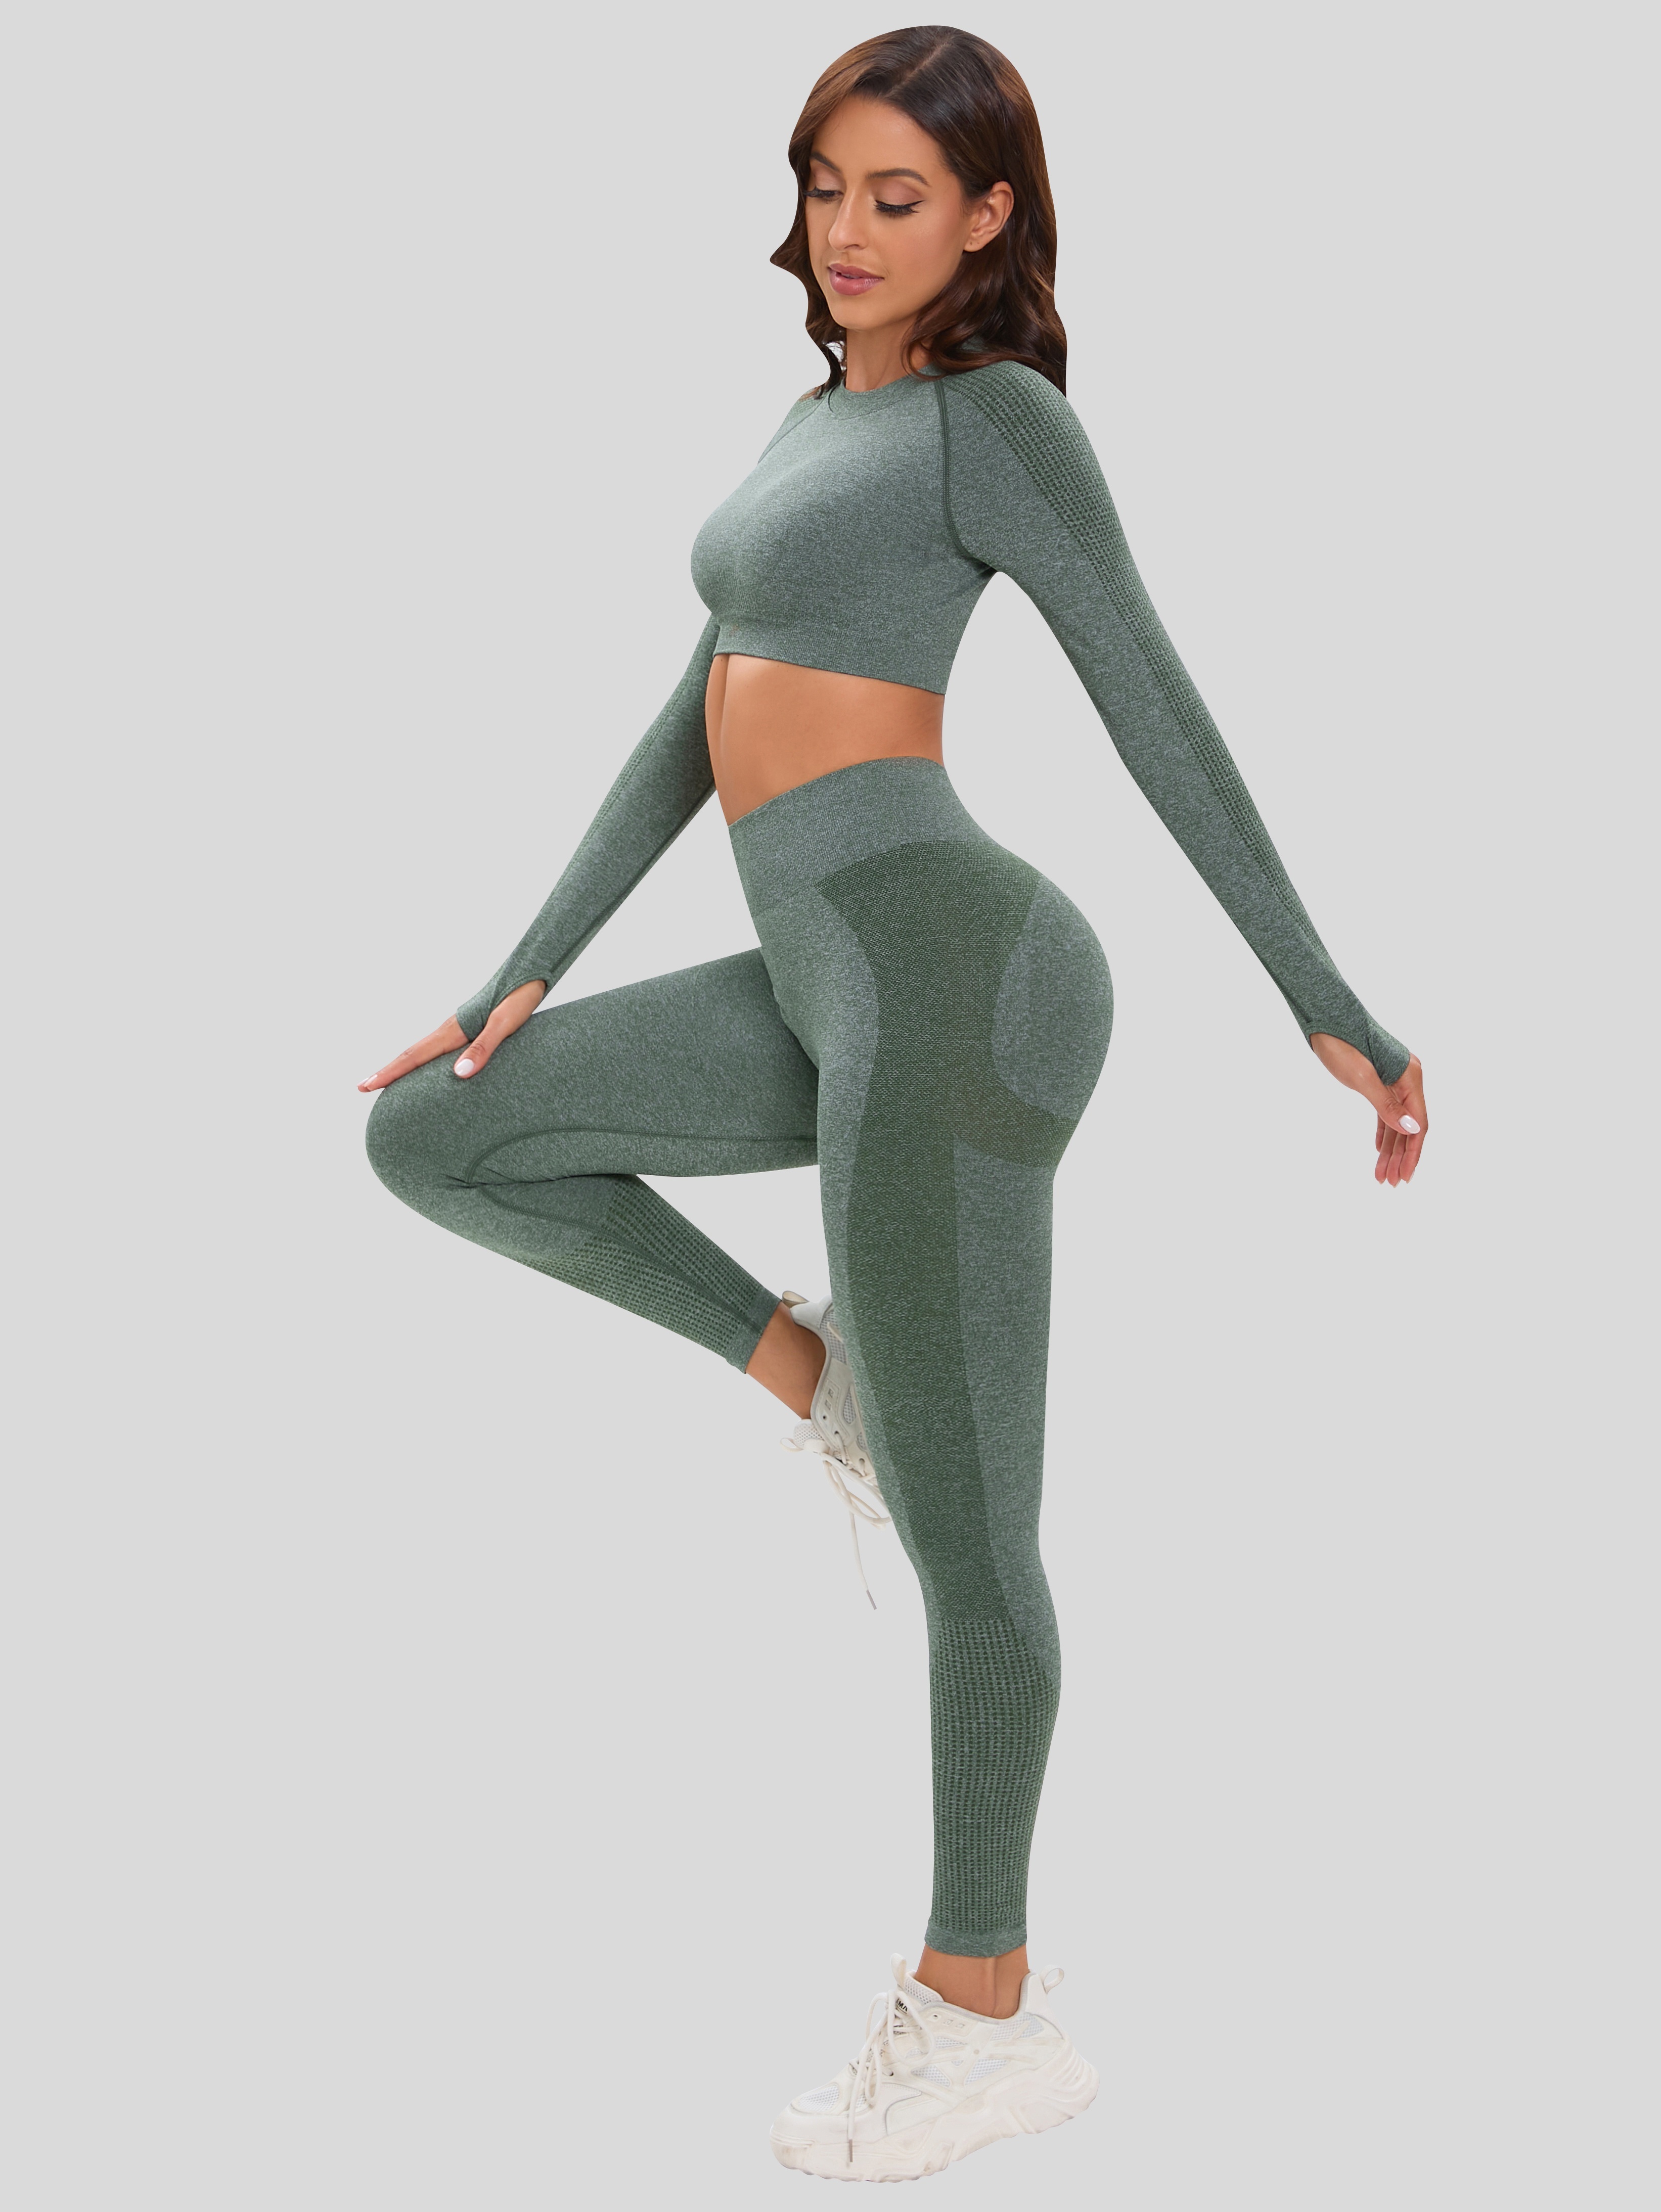 Leggings Women's Sports Yoga Pants High Waist Seamless Yoga Set